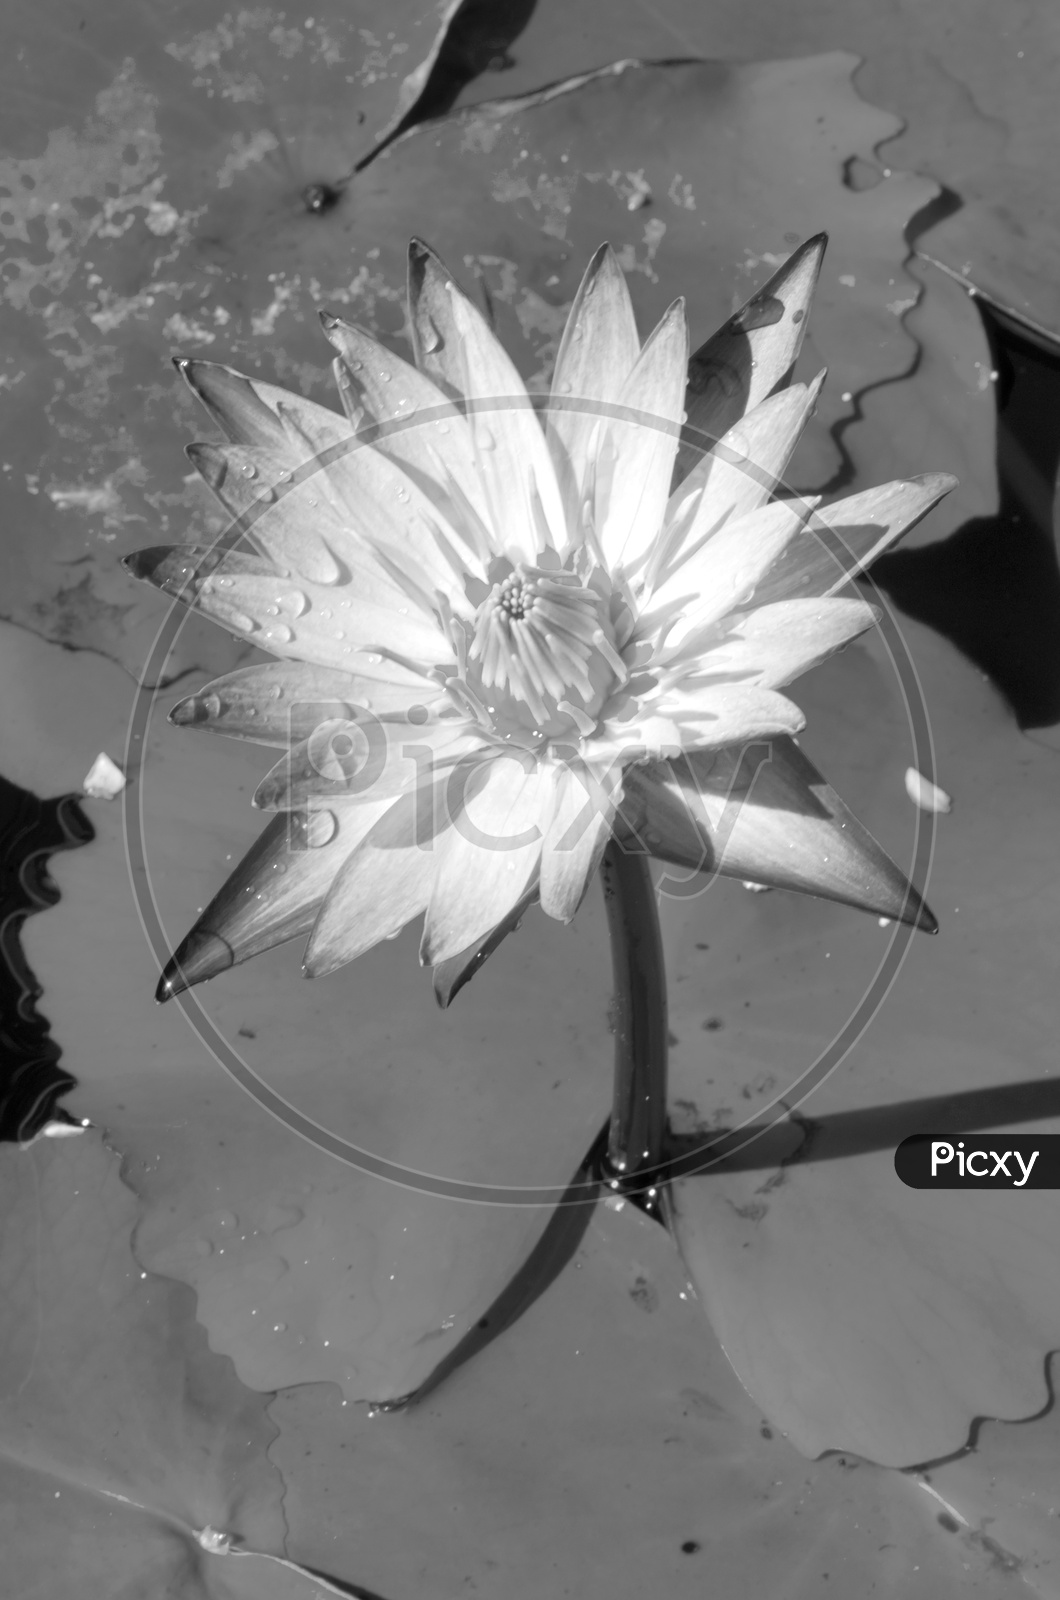 Black and white lotus